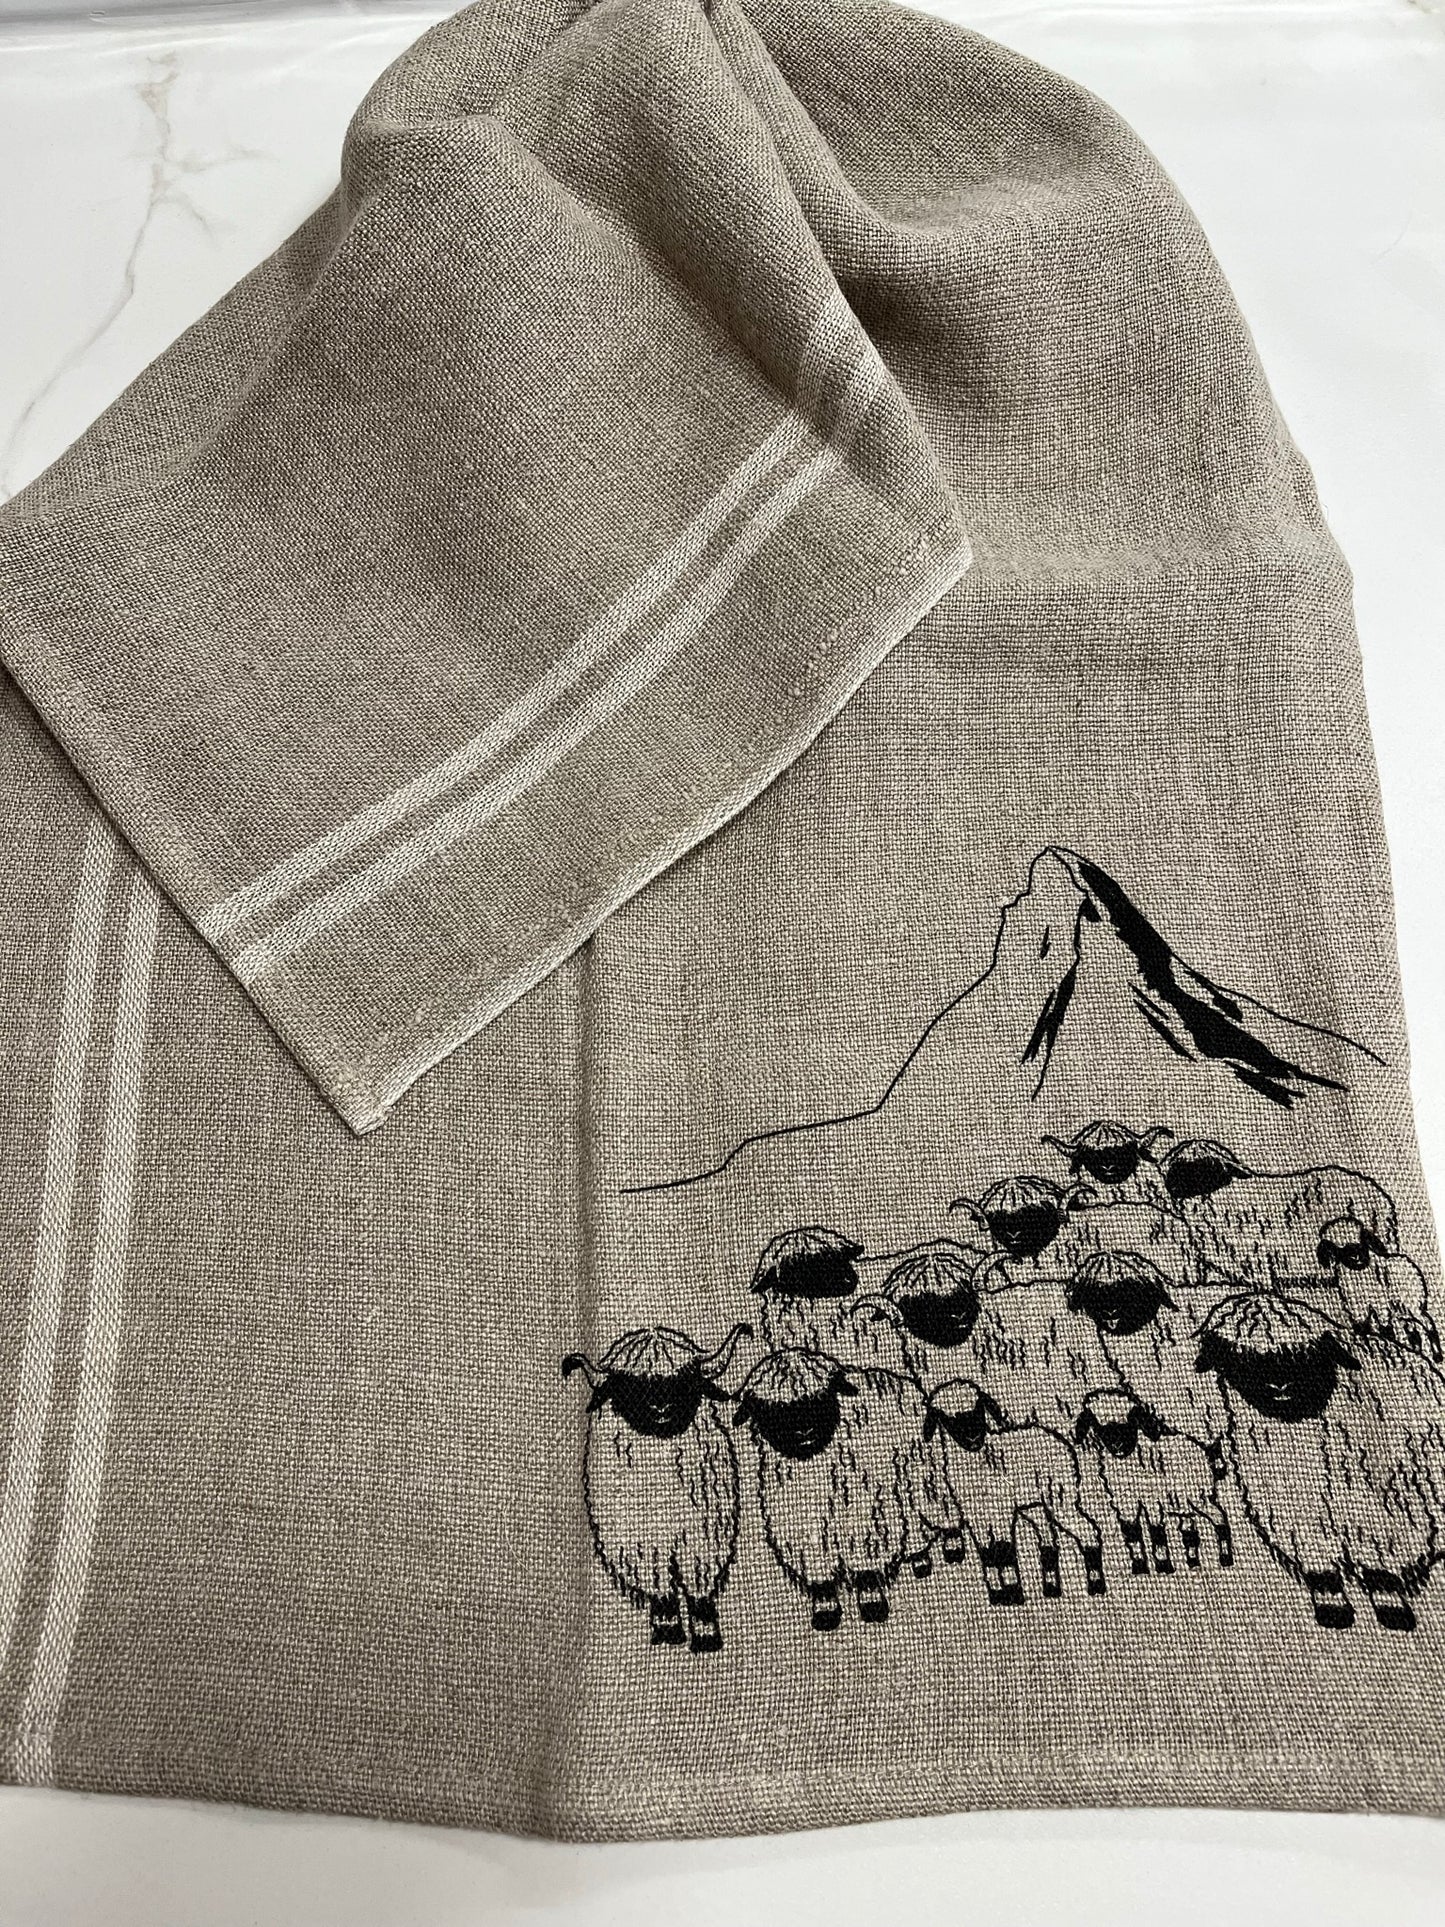 Blacknose sheep dish towel, white w/black stripes